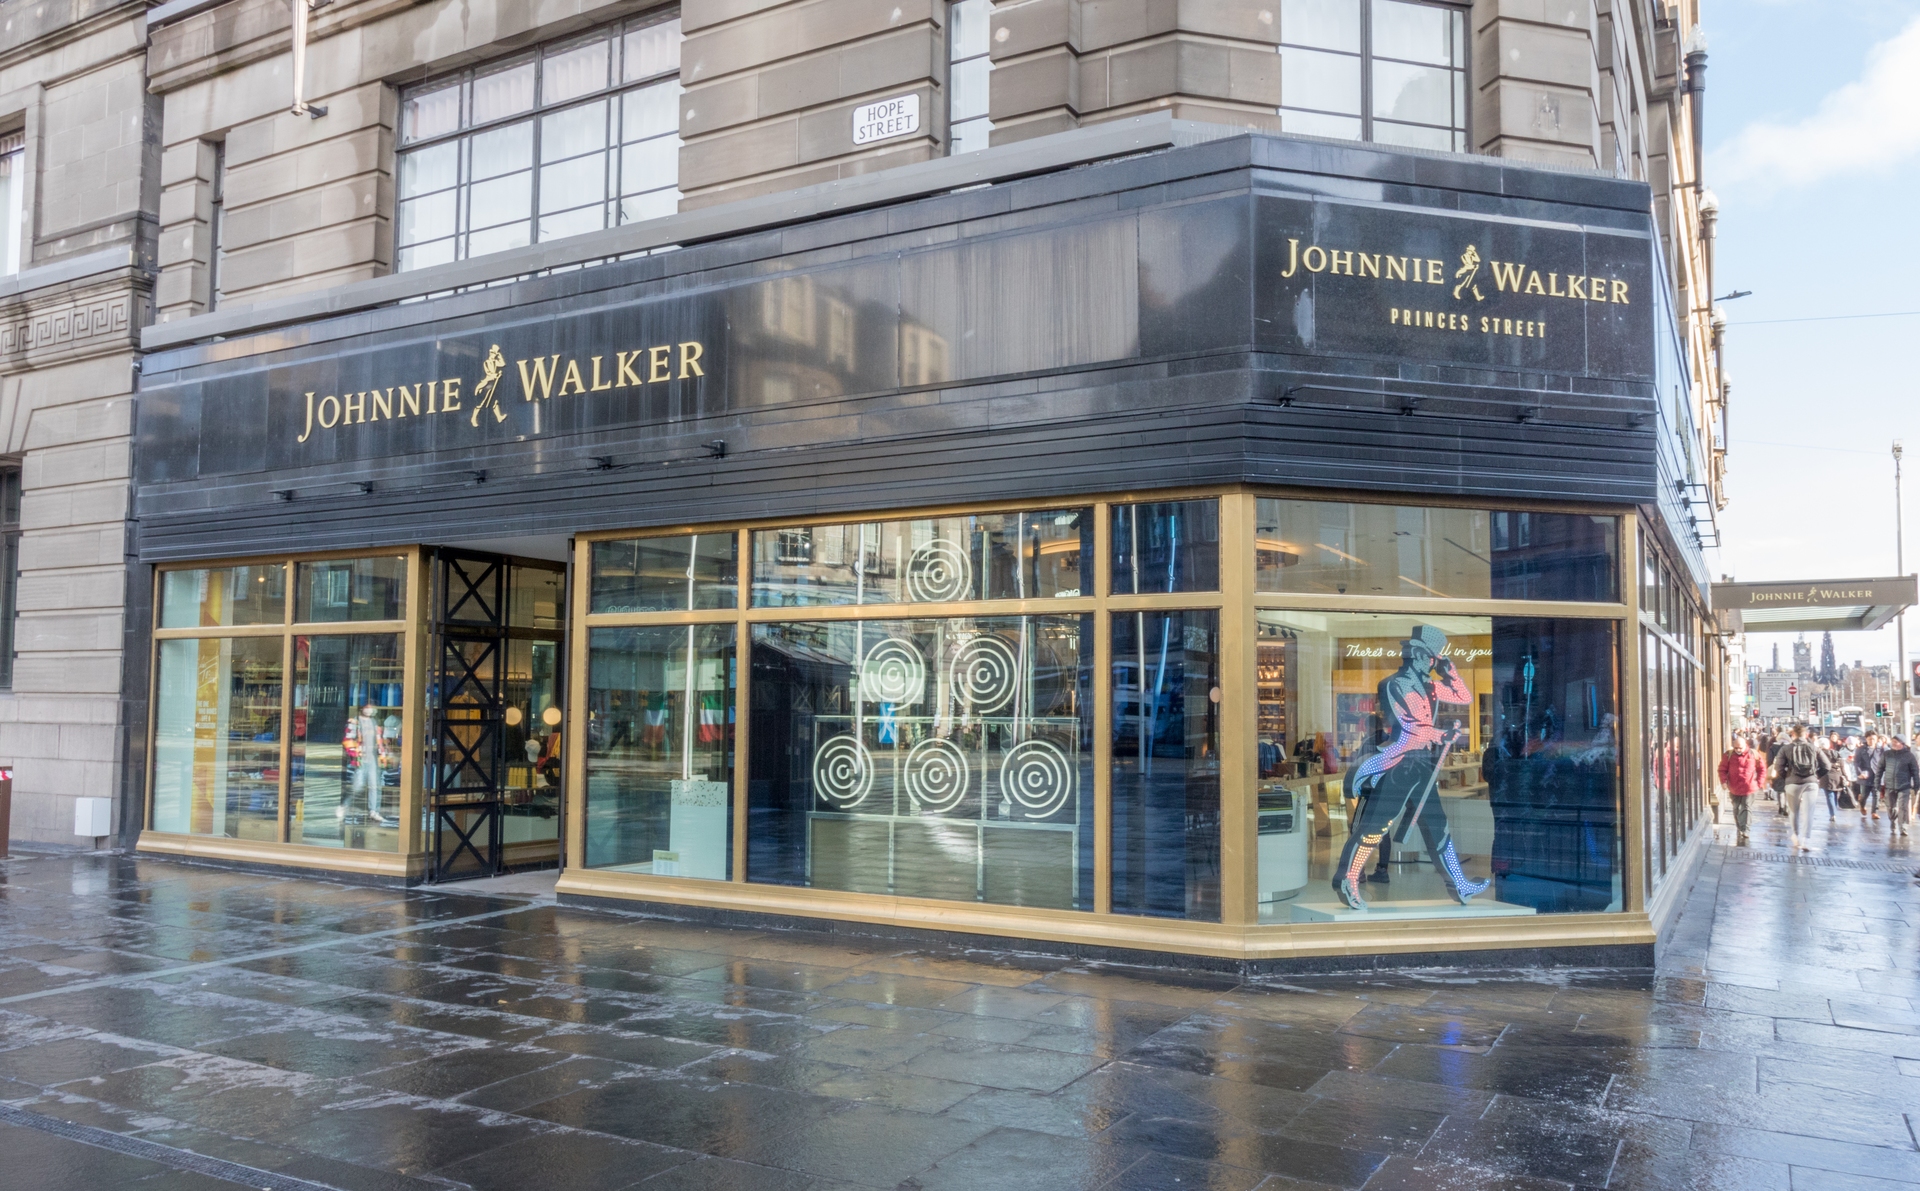 Entrance of Johnnie Walker Princes Street whisky experience in Edinburgh.